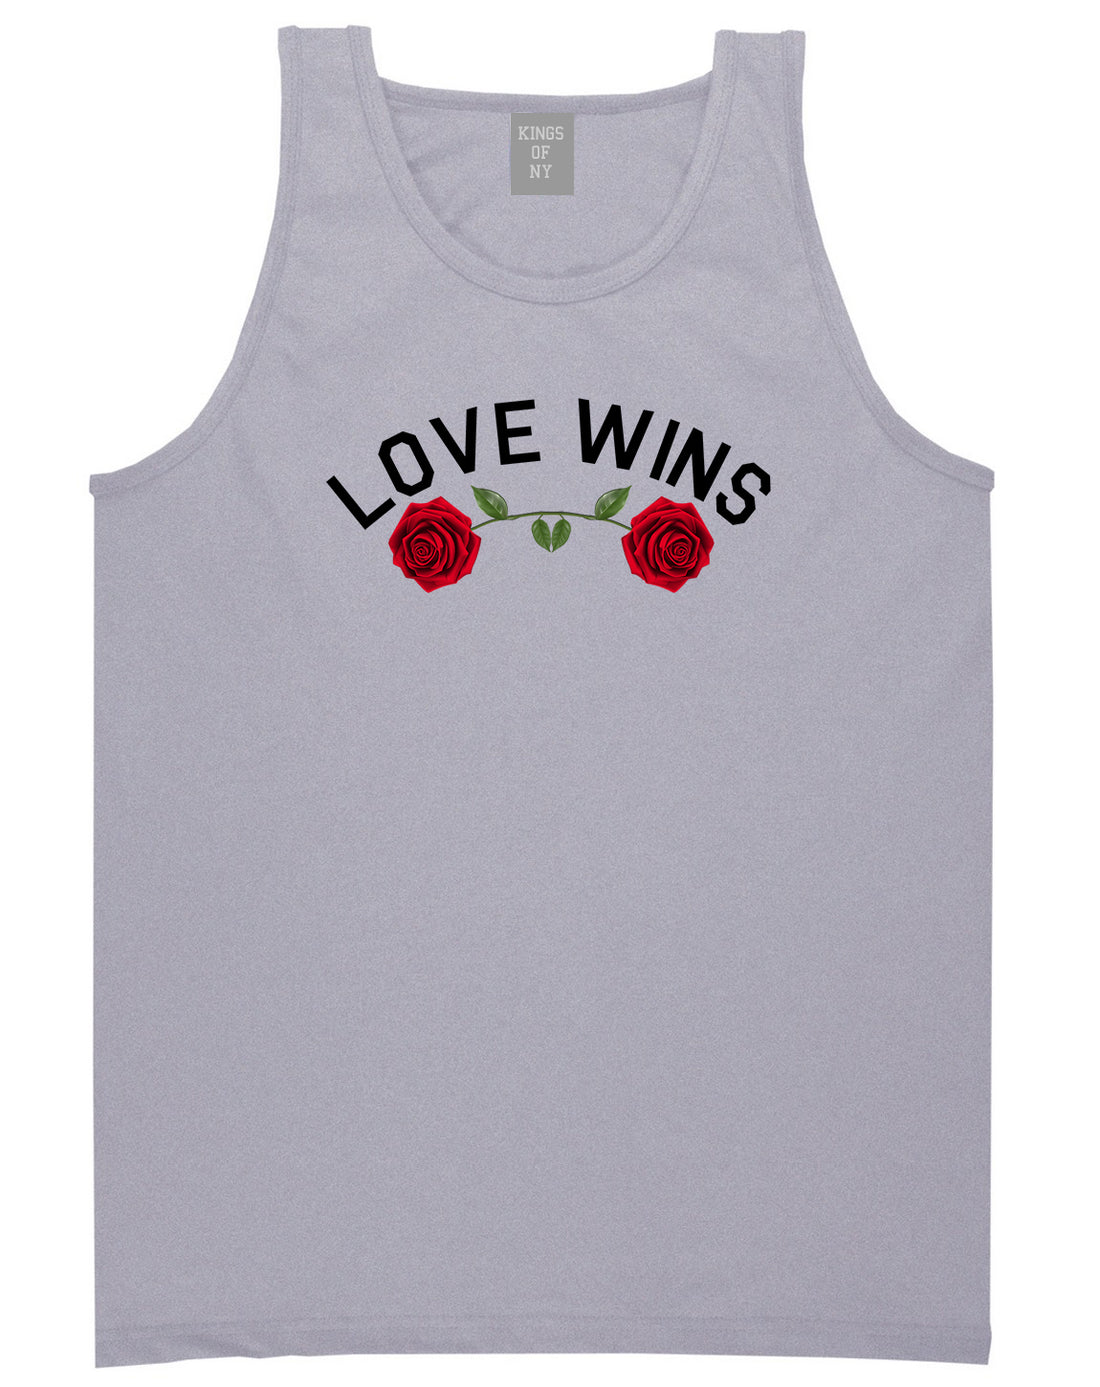 Love Wins Rose Mens Tank Top Shirt Grey by Kings Of NY